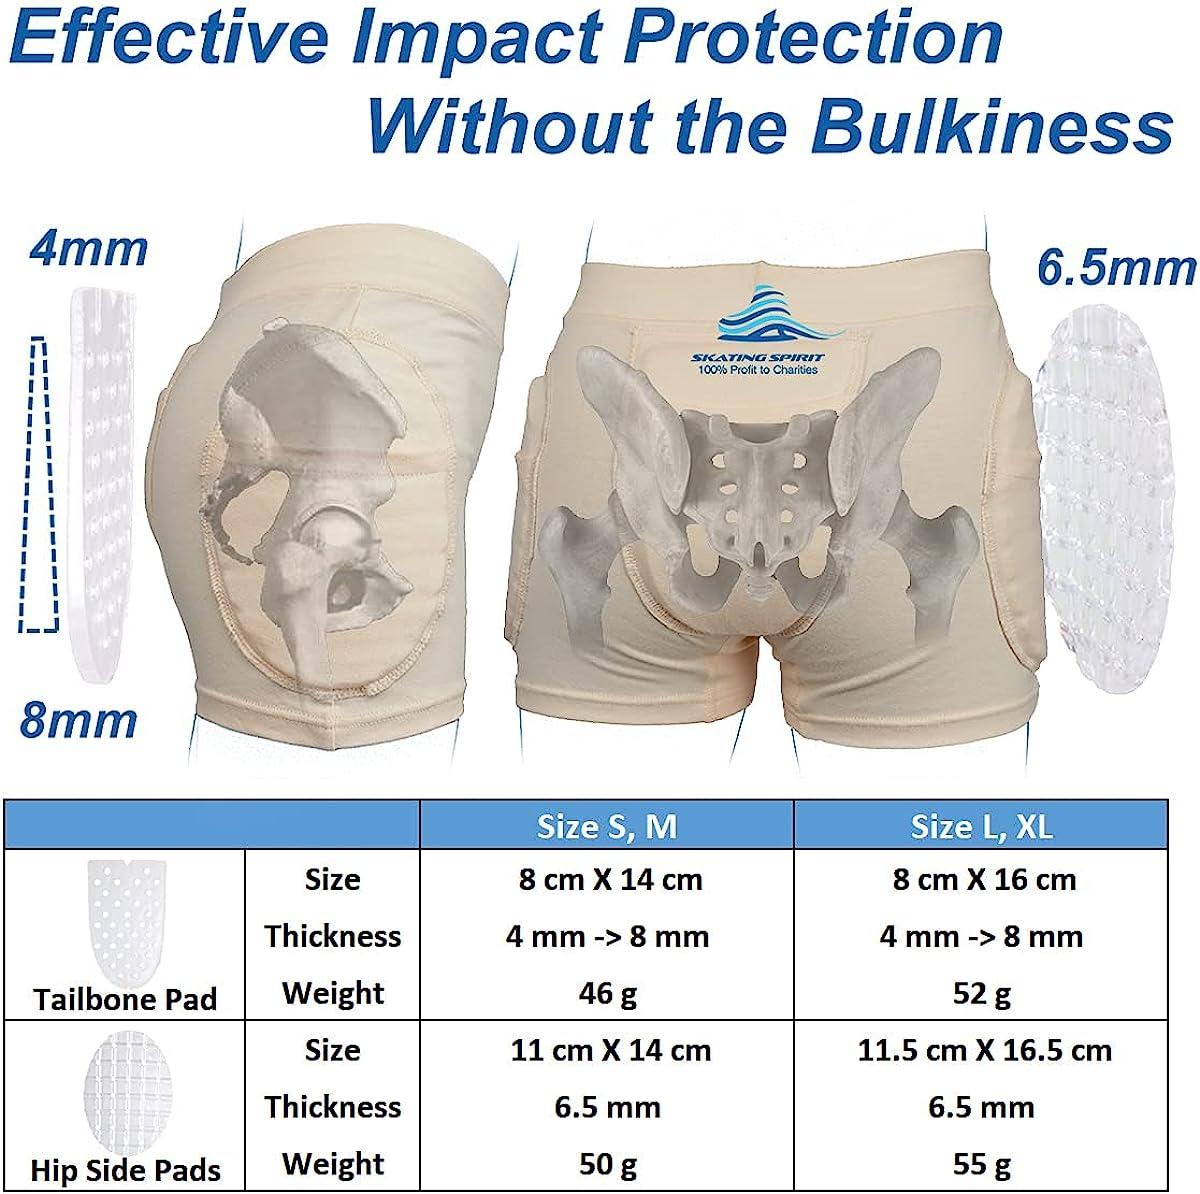 PHX Tuffbelt (Waist, Kidney and Tailbone Protector)